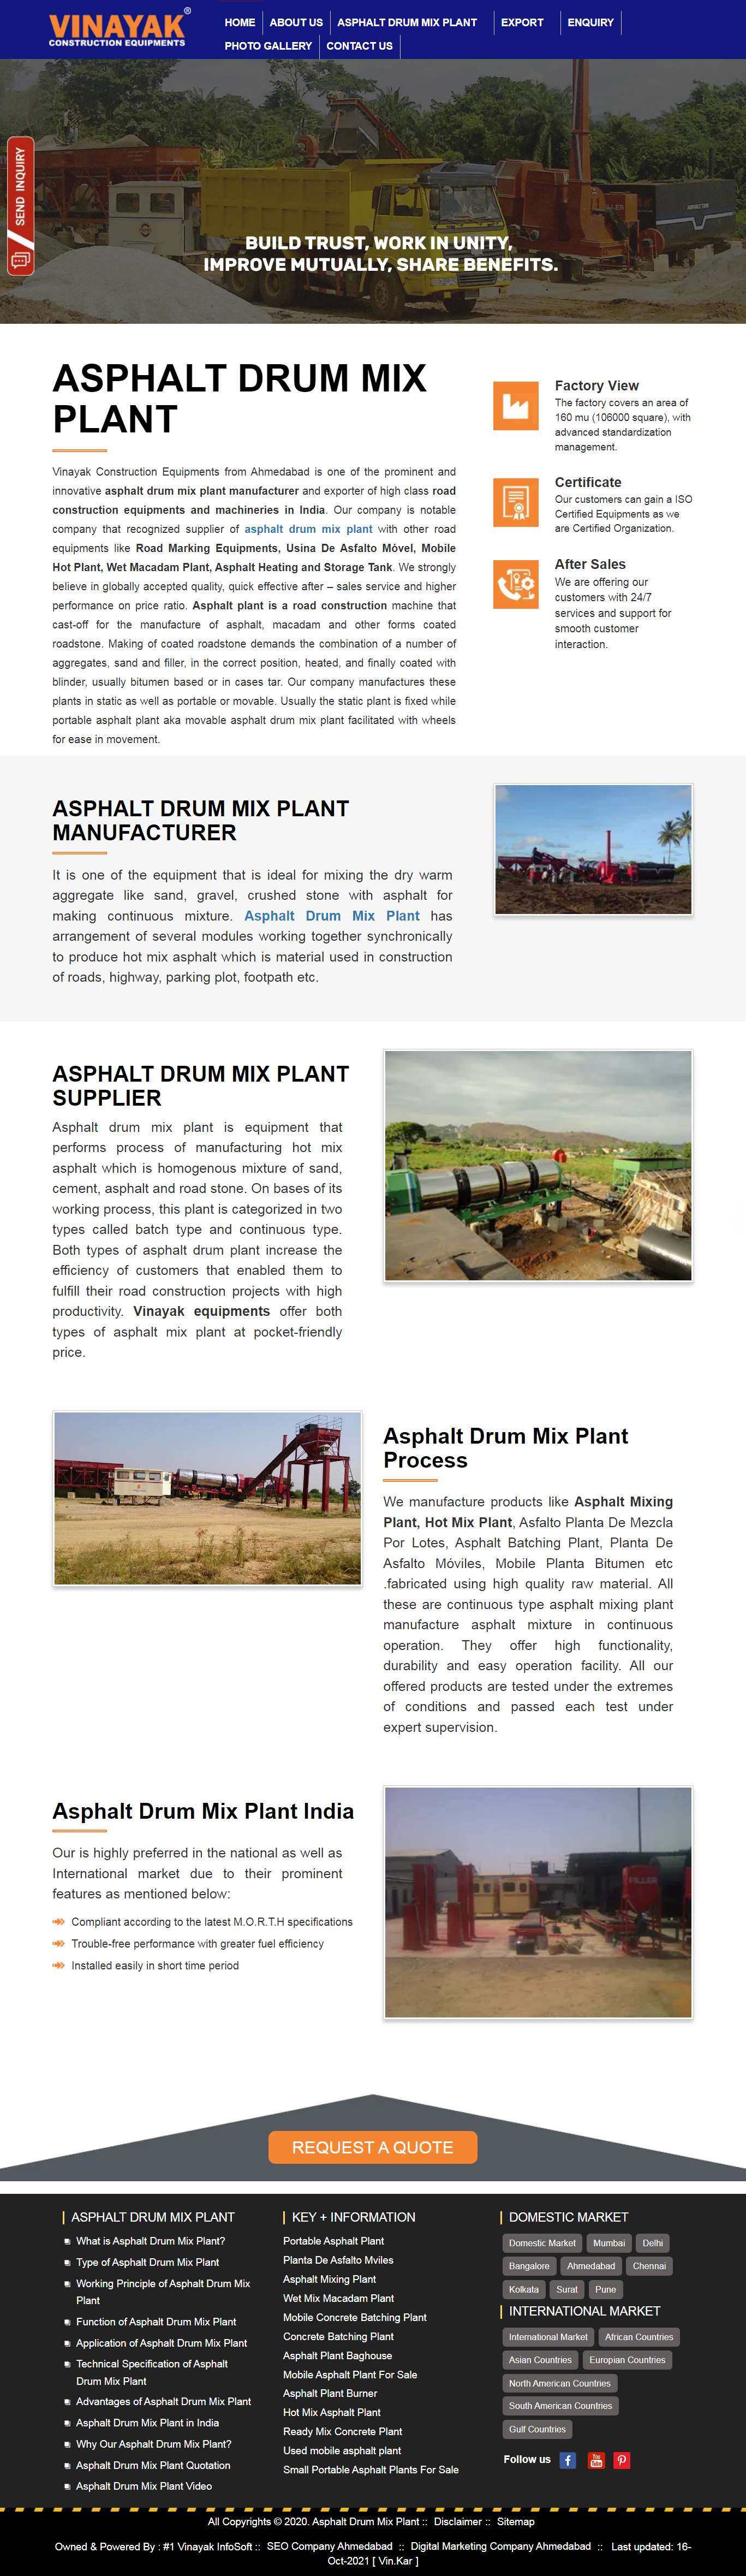 Asphalt drum mixplant